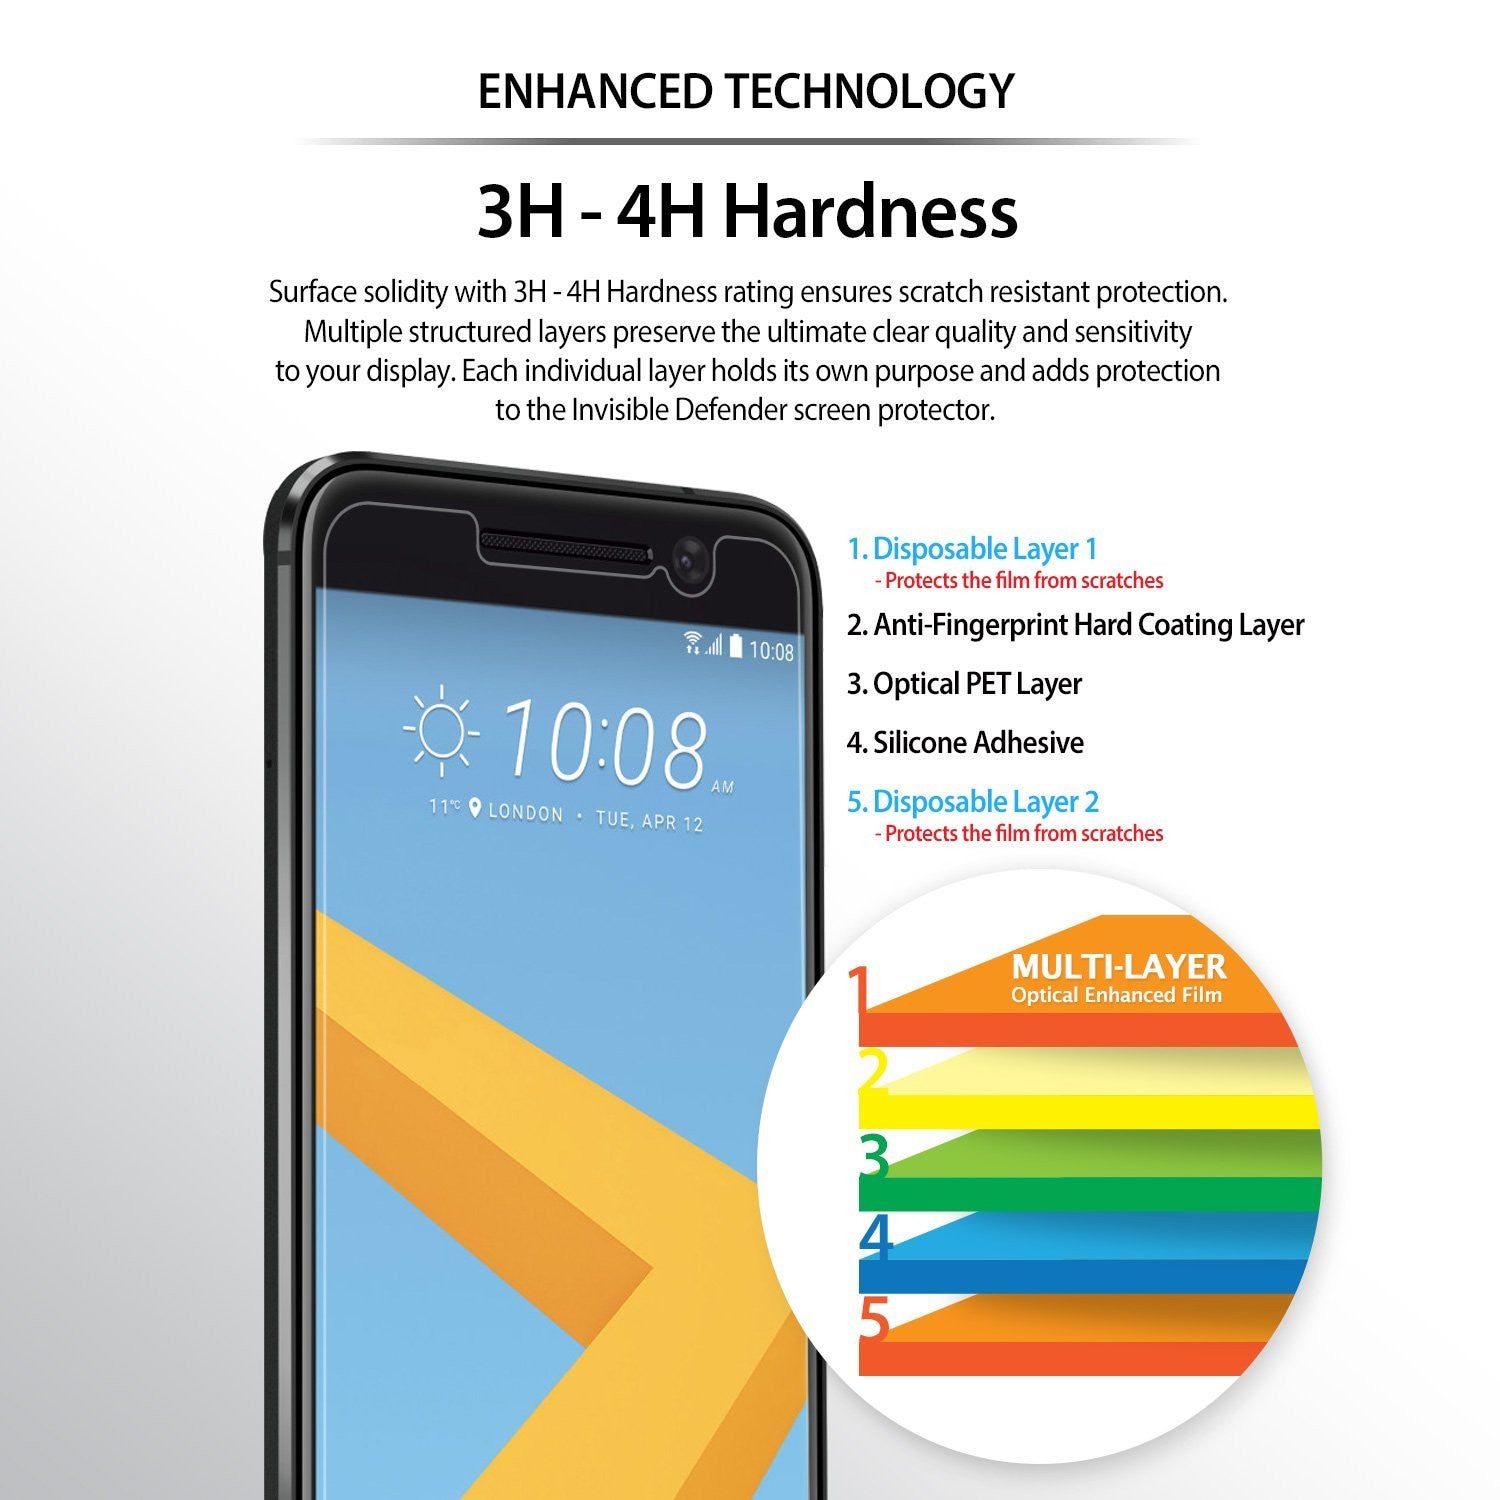 enhanced technology - 3h -4h hardness